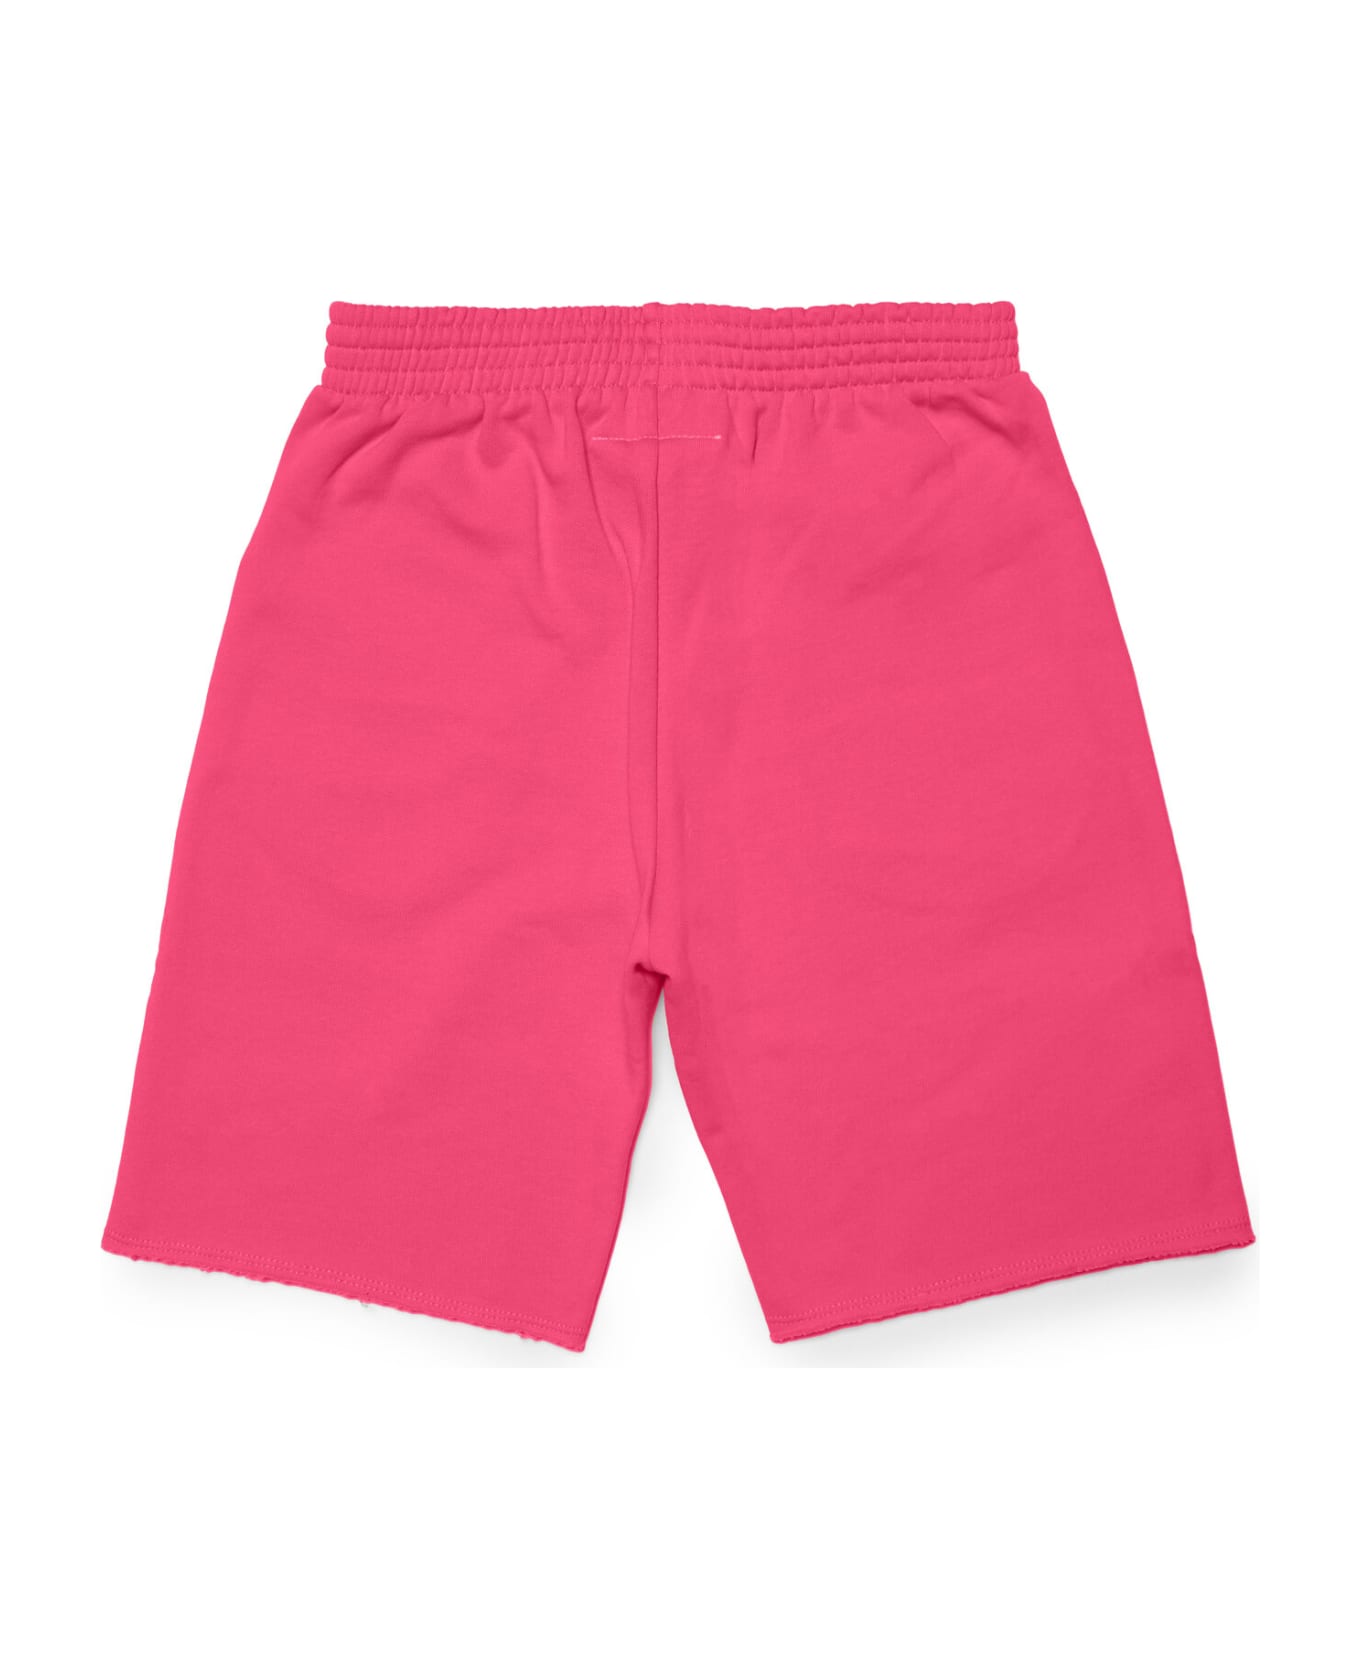 MM6 Maison Margiela Mm6p72u Shorts Maison Margiela Pink Straight-leg Fleece Shorts With Logo - Super pink